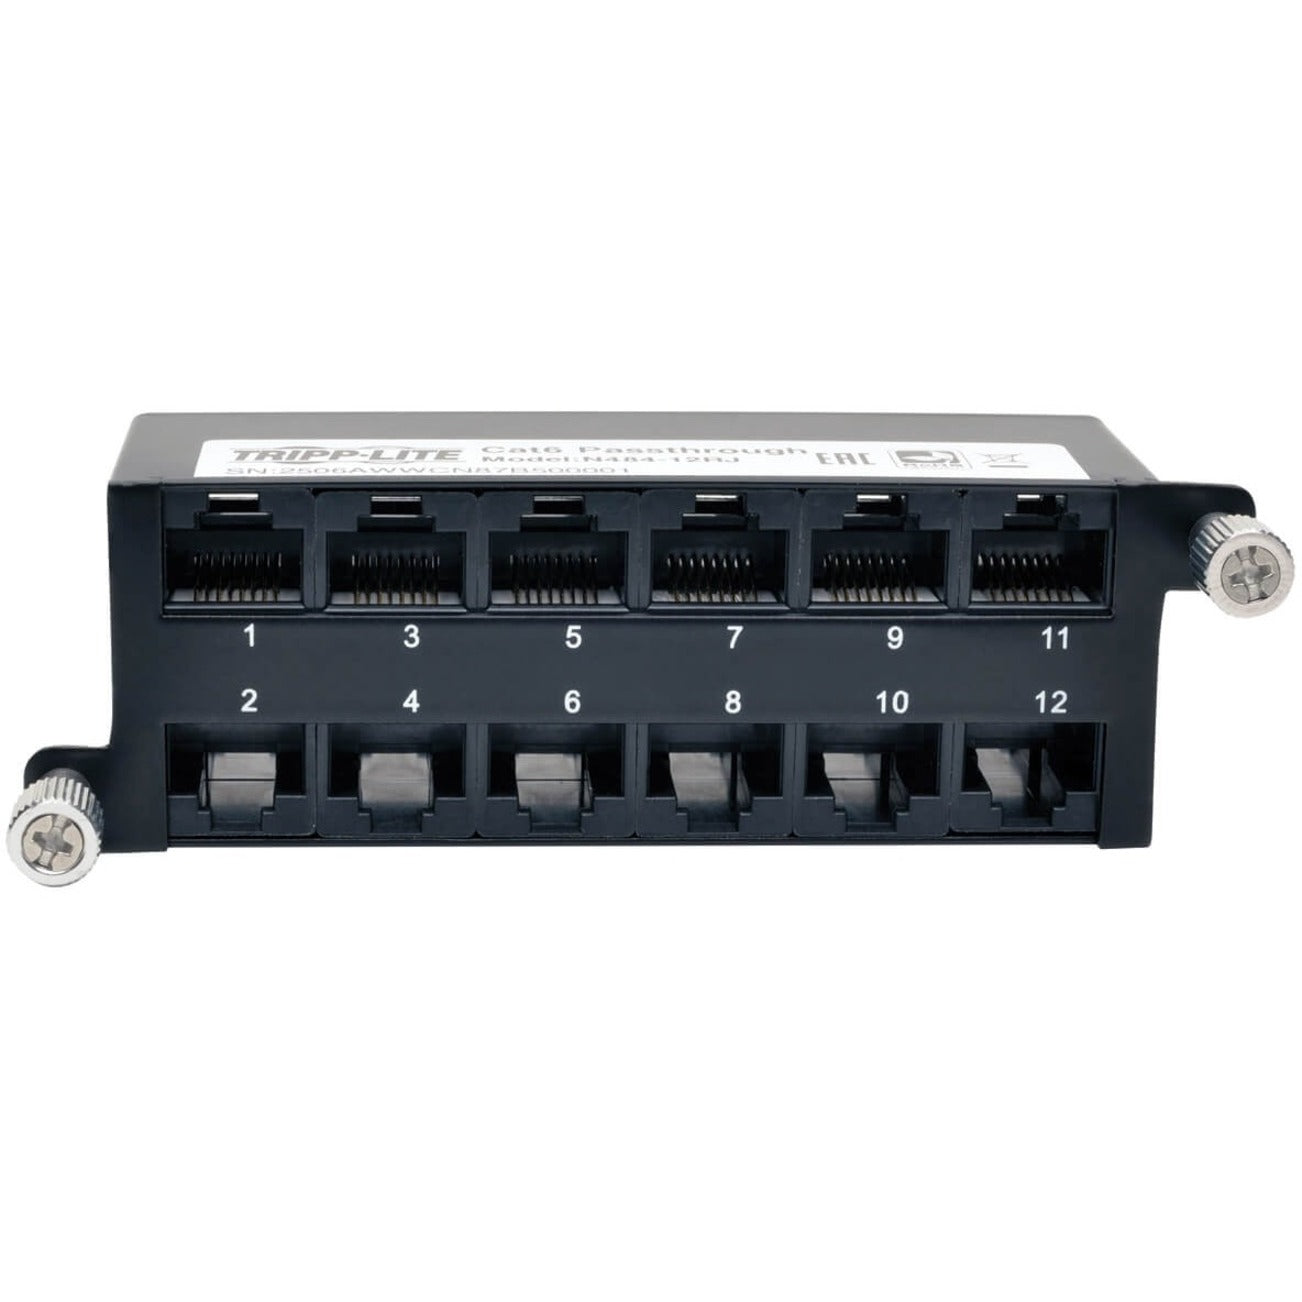 Tripp Lite N484-12RJ Cat6a Pass-Through Cassette - (x12) RJ45, Network Patch Panel